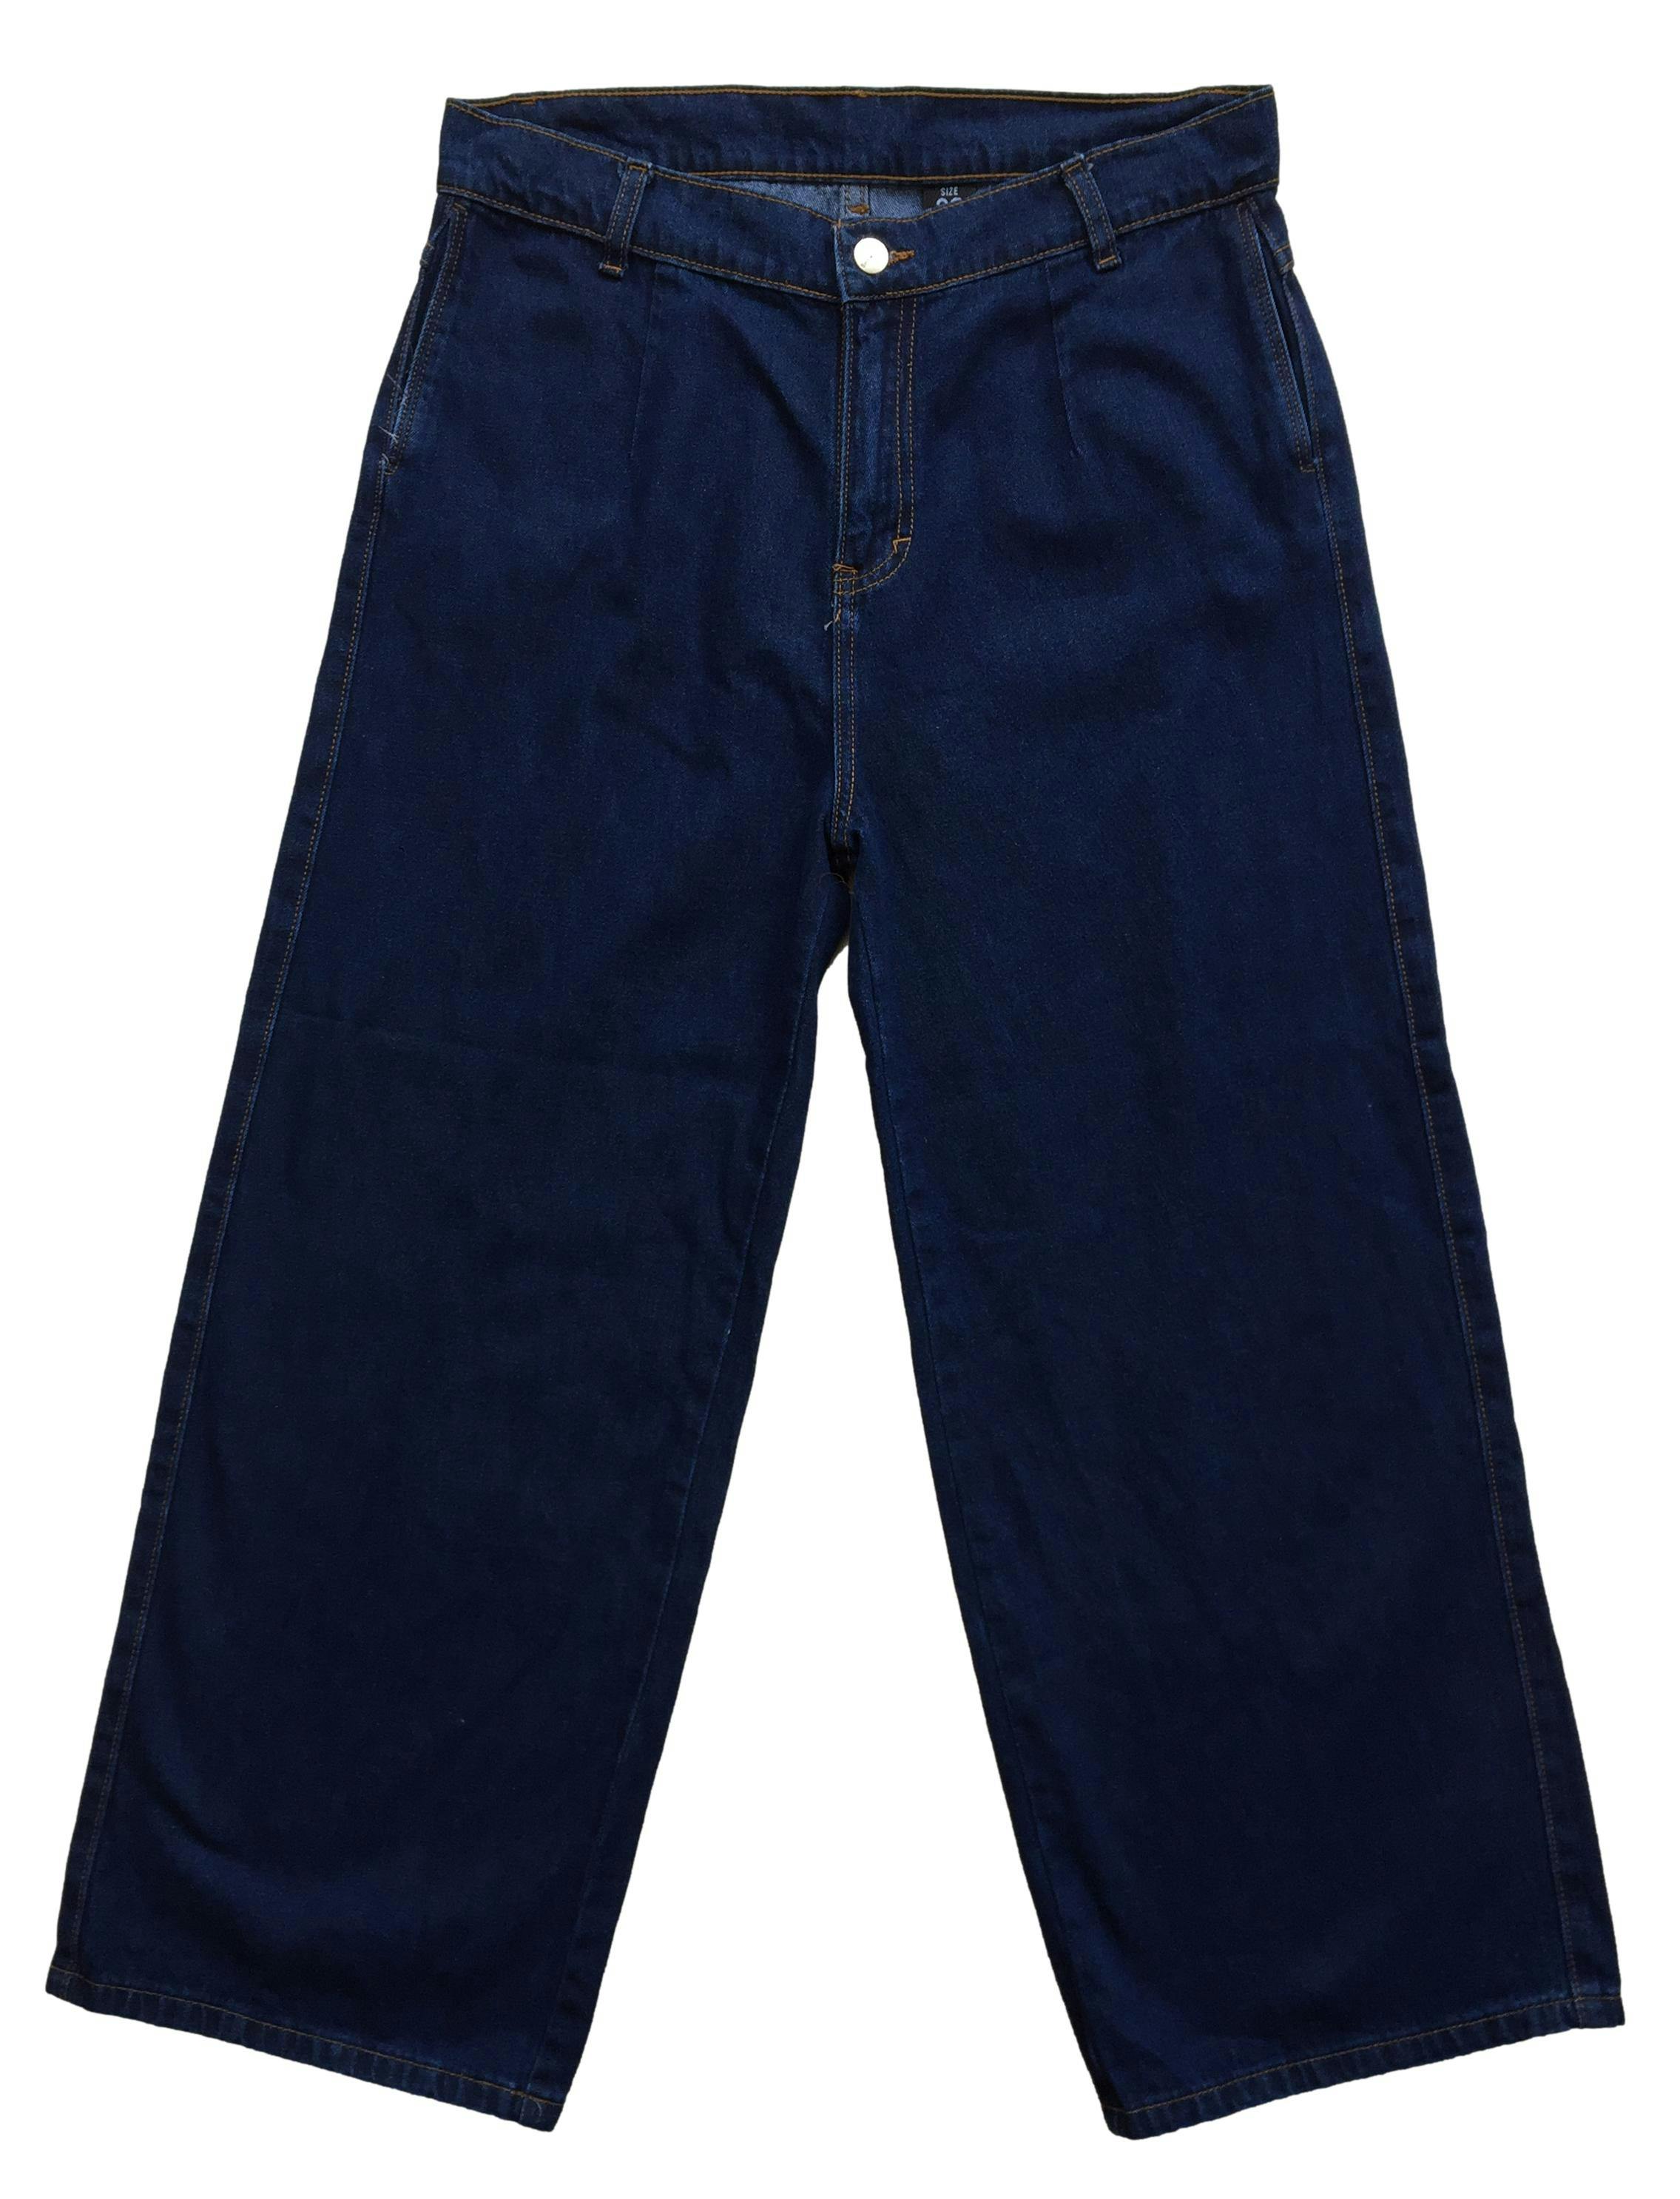 Pantalón jean, pierna ancha, bolsillos y botón delanteros. Cintura: 80cm, Tiro: 30cm, Largo: 92cm